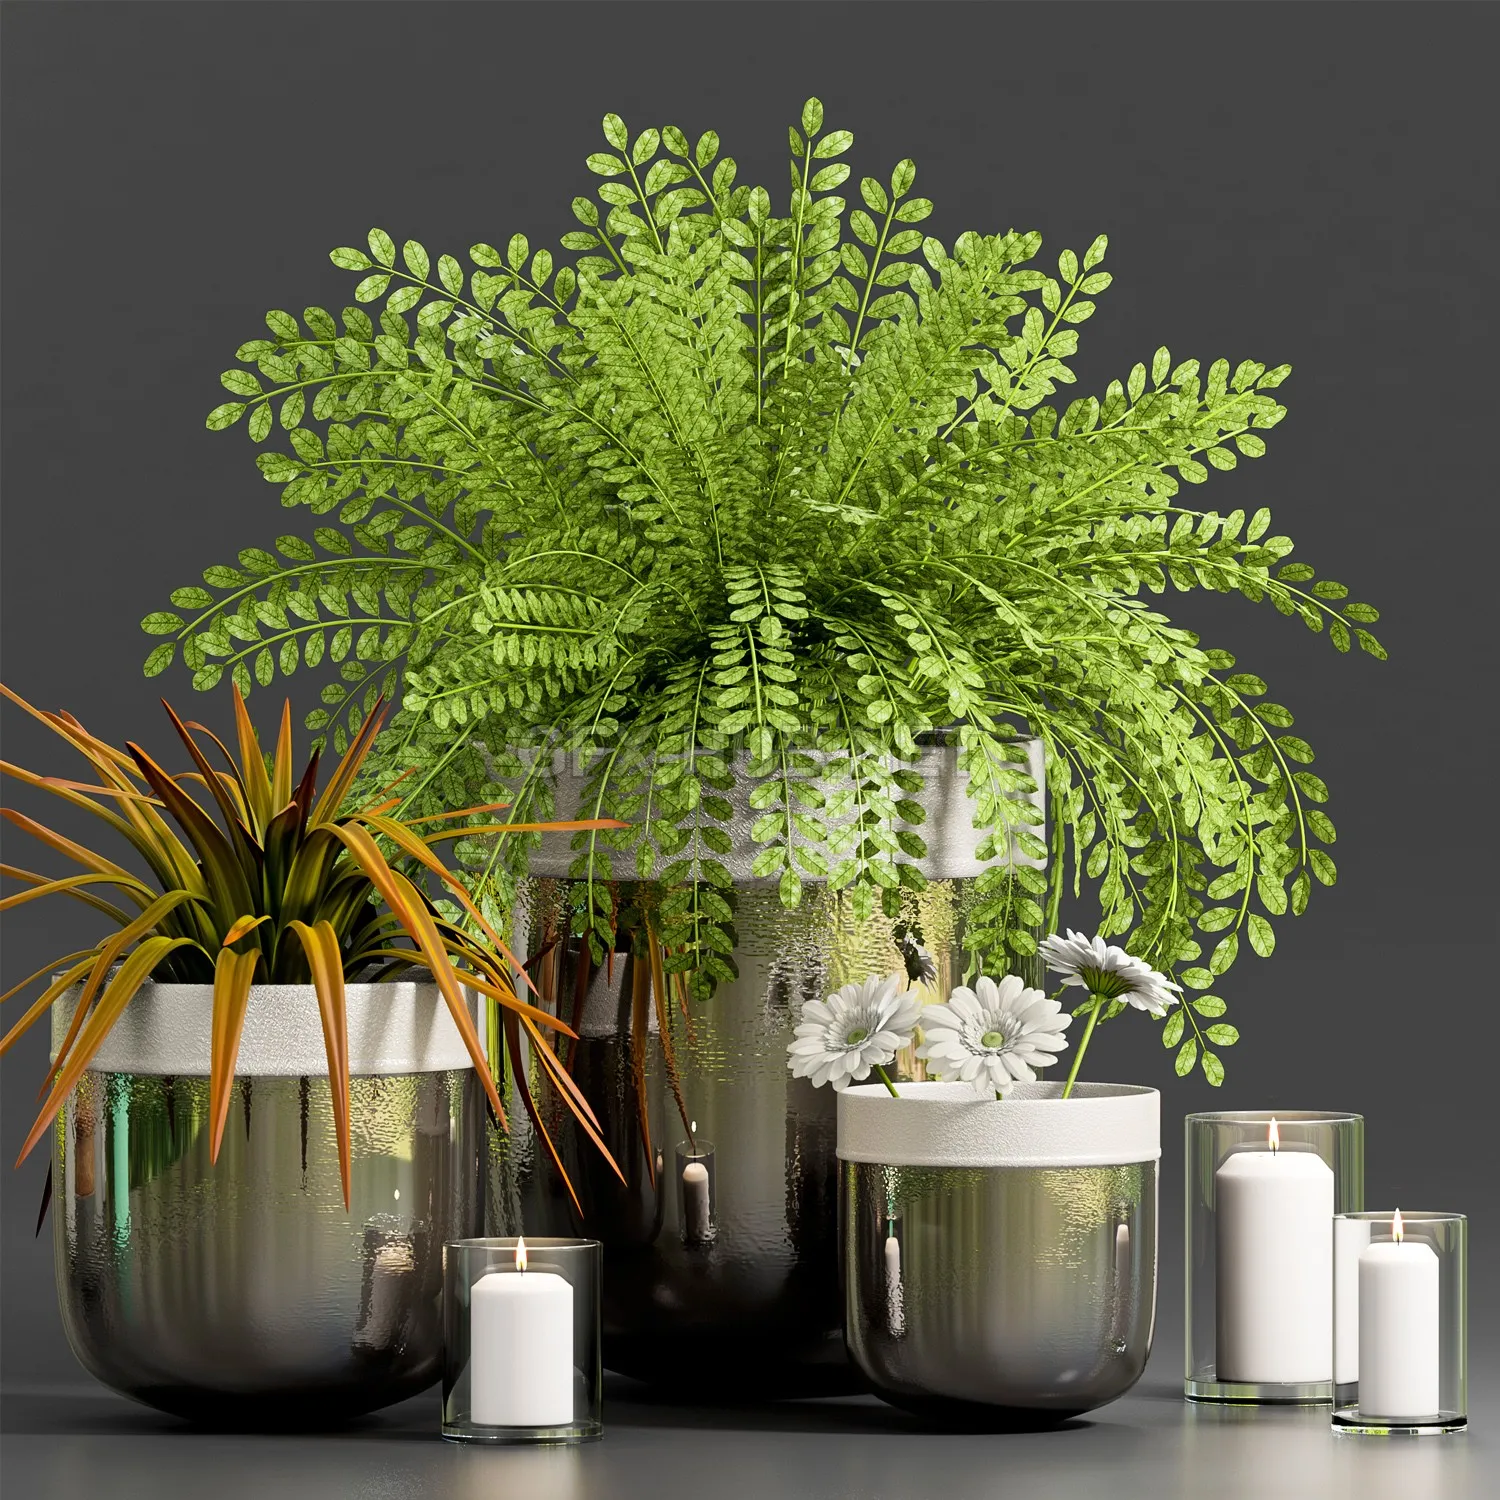 FURNITURE 3D MODELS – DECORATIVE PLANT WITH GERBERA FLOWER